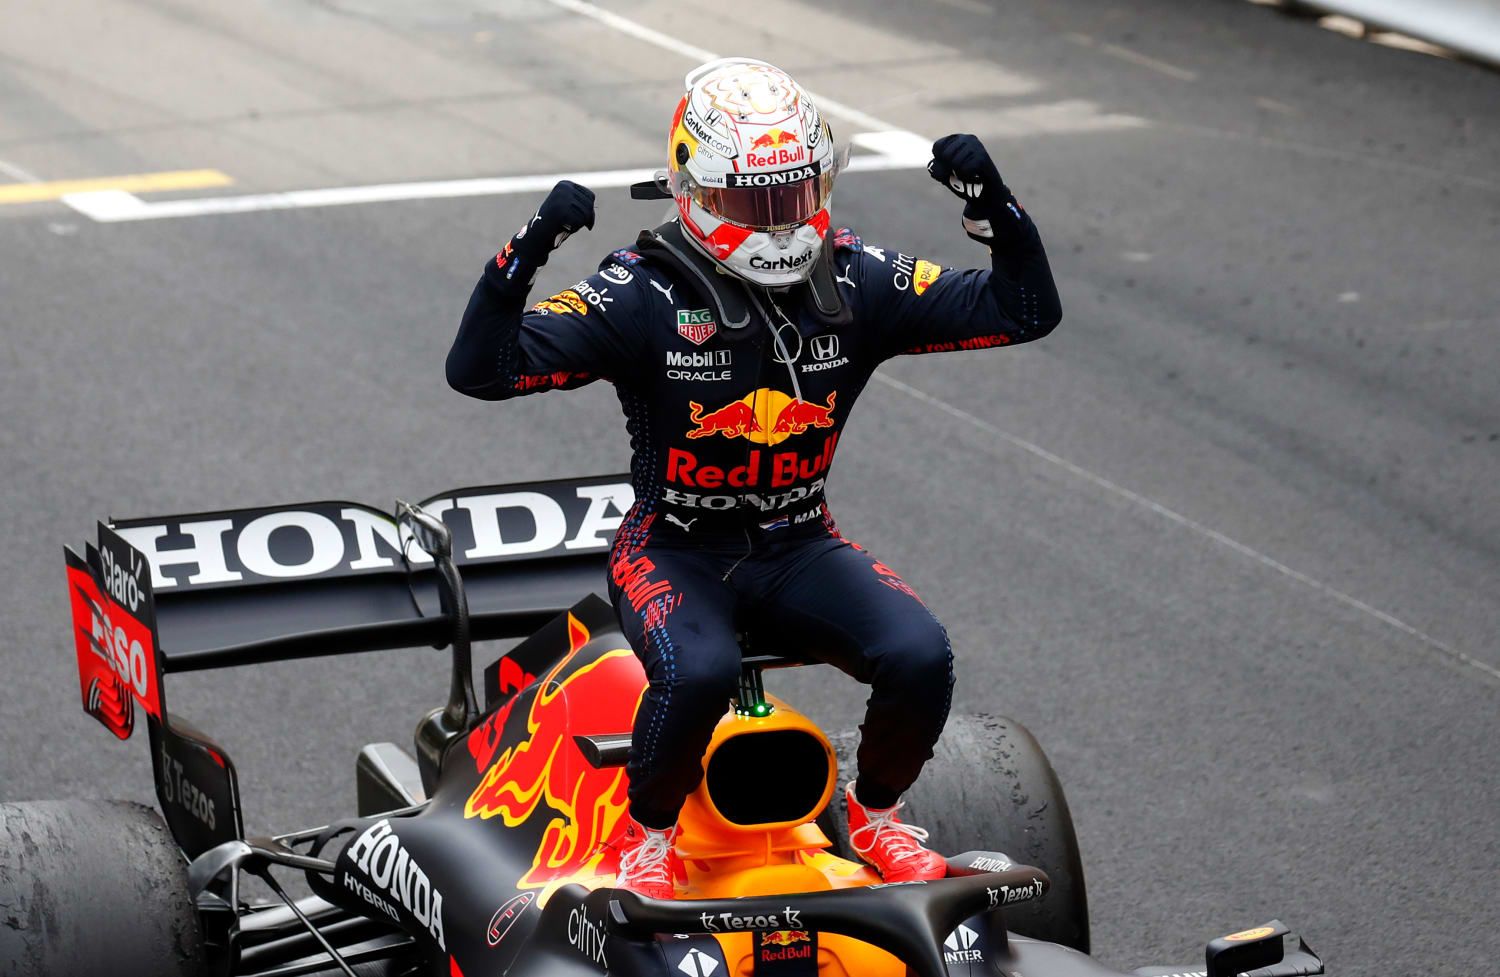 Monaco Grand Prix 2021: race report and reaction